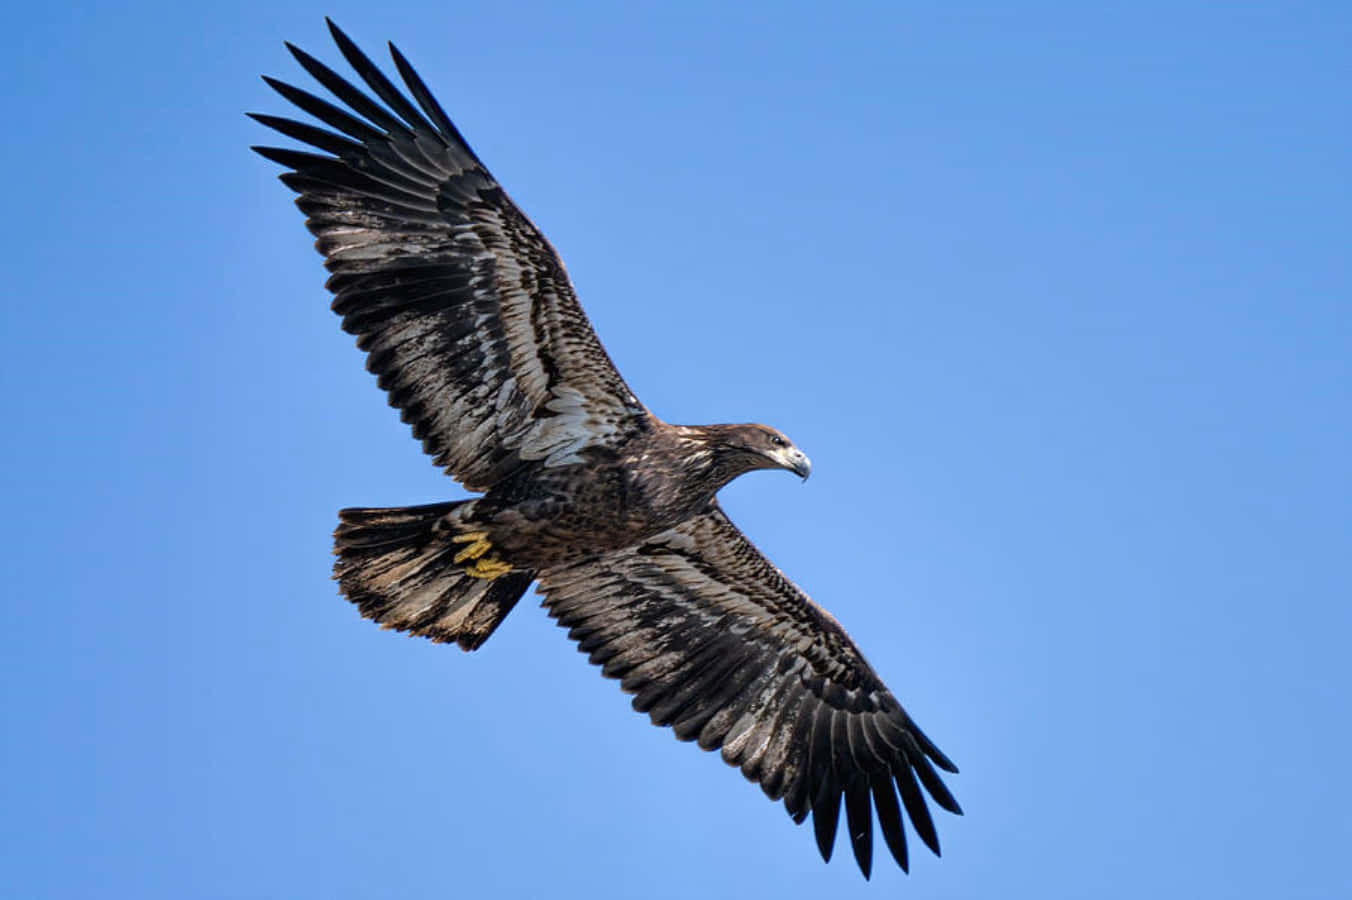 “Young Bald Eagle Flying High”